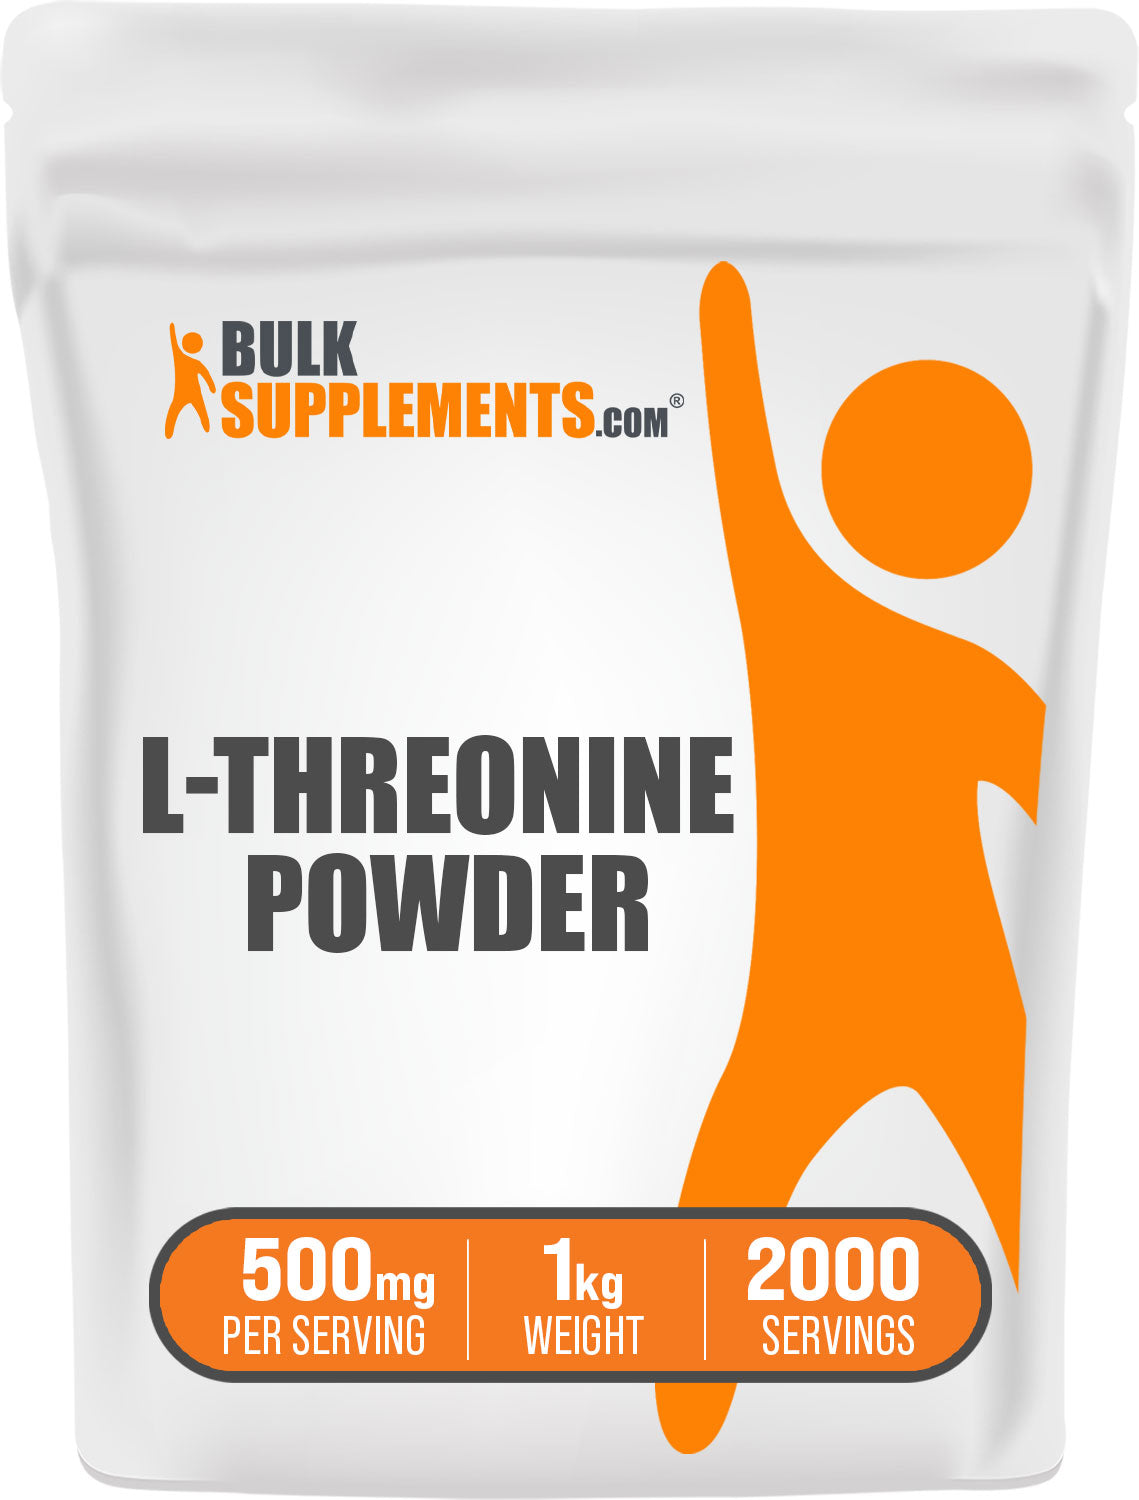 L-Threonine Powder 1kg